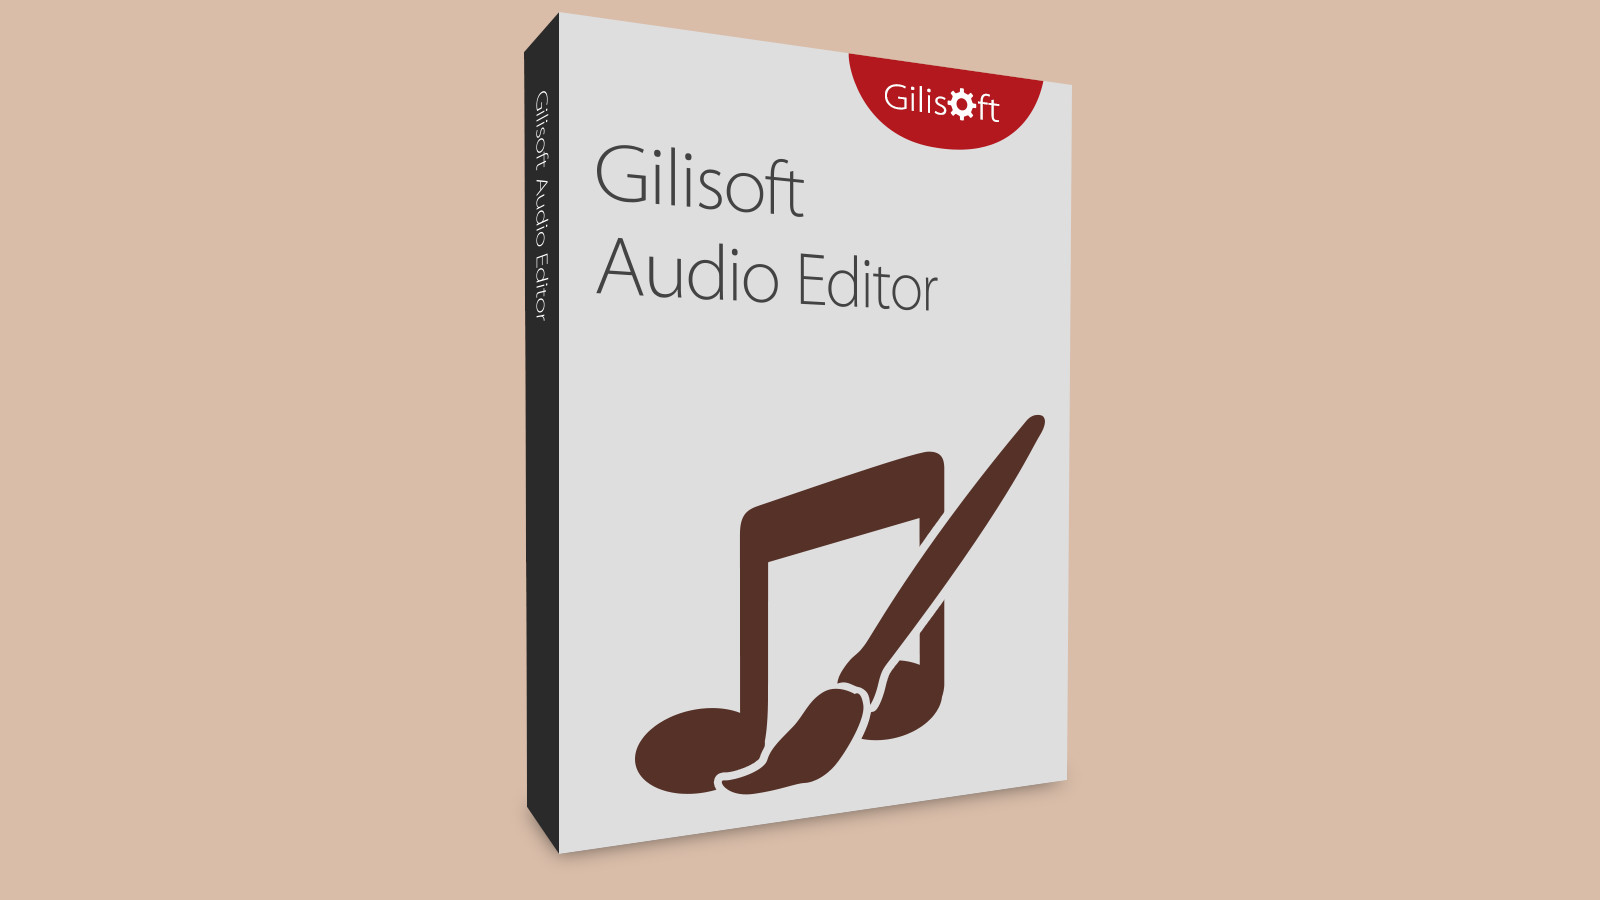 Gilisoft Audio Editor CD Key 16.5 $